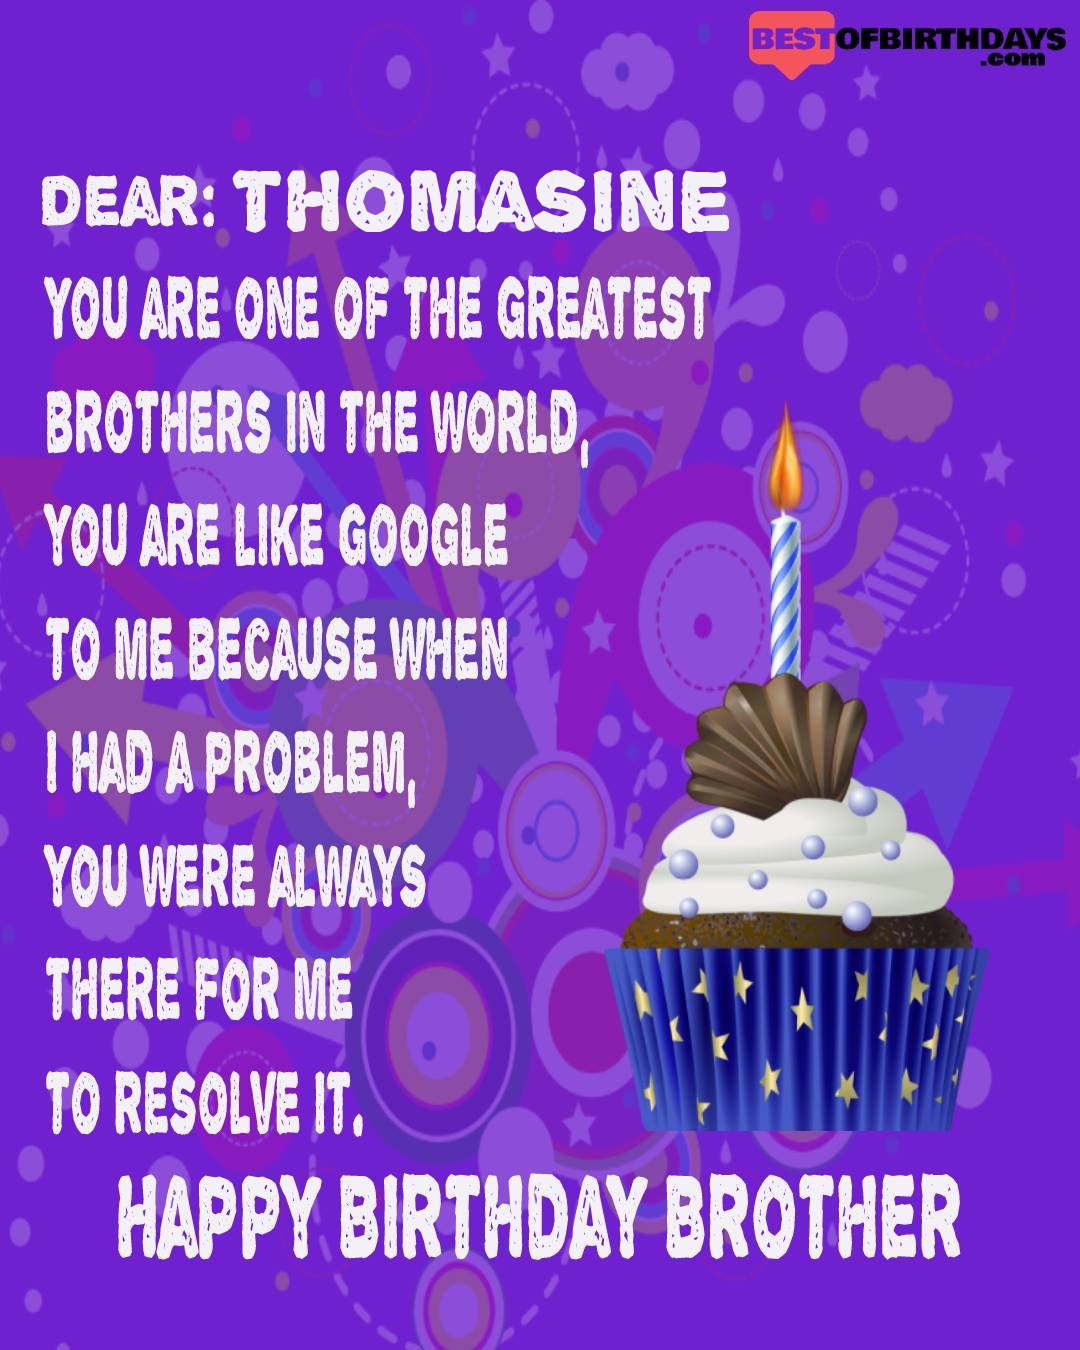 Happy birthday thomasine bhai brother bro